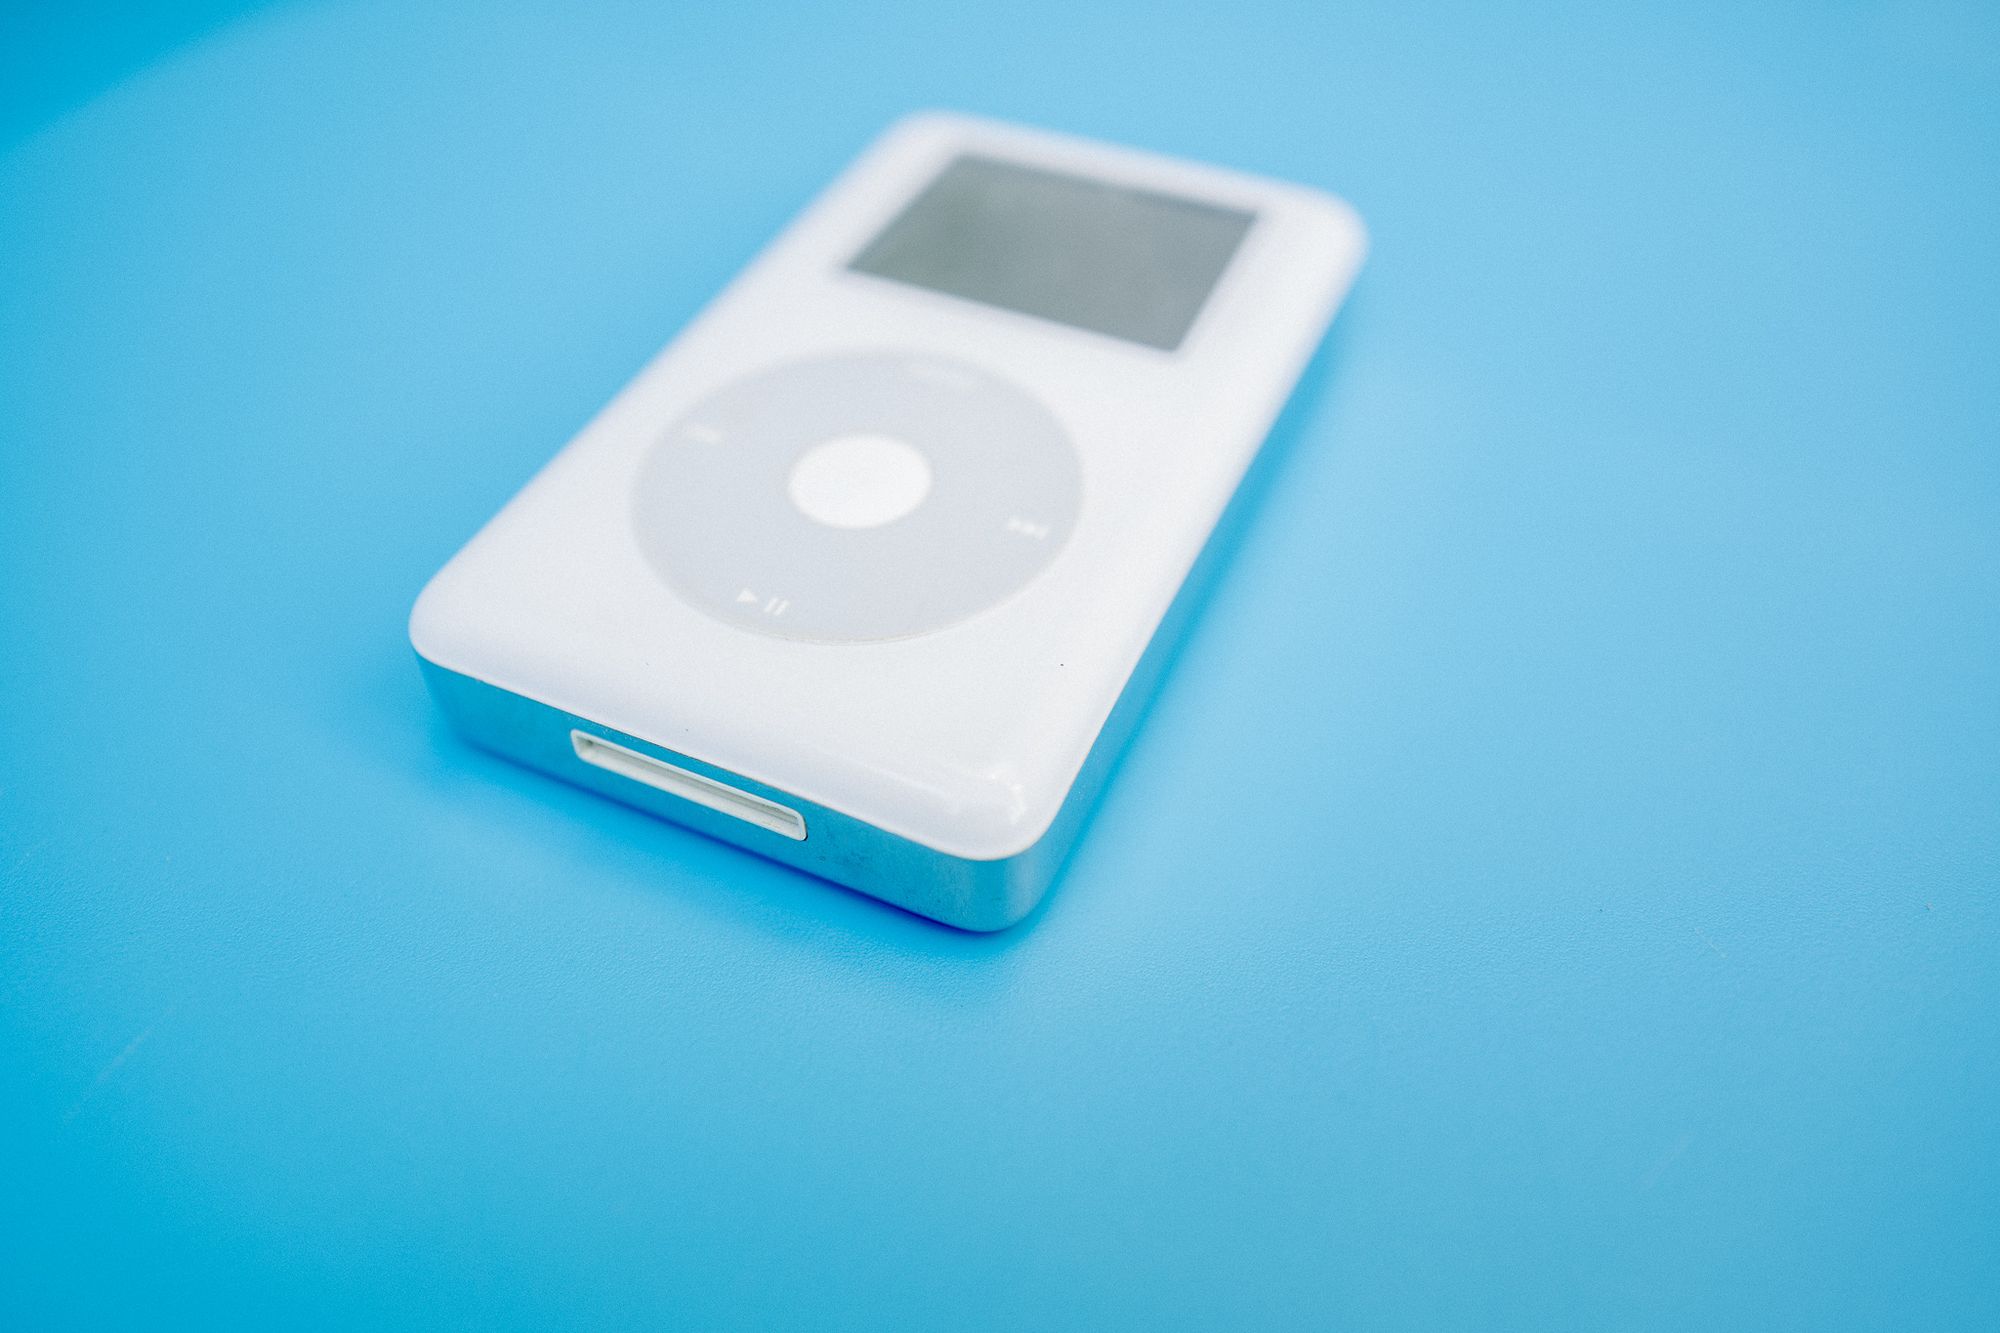 iPod click wheel lying flat on blue background